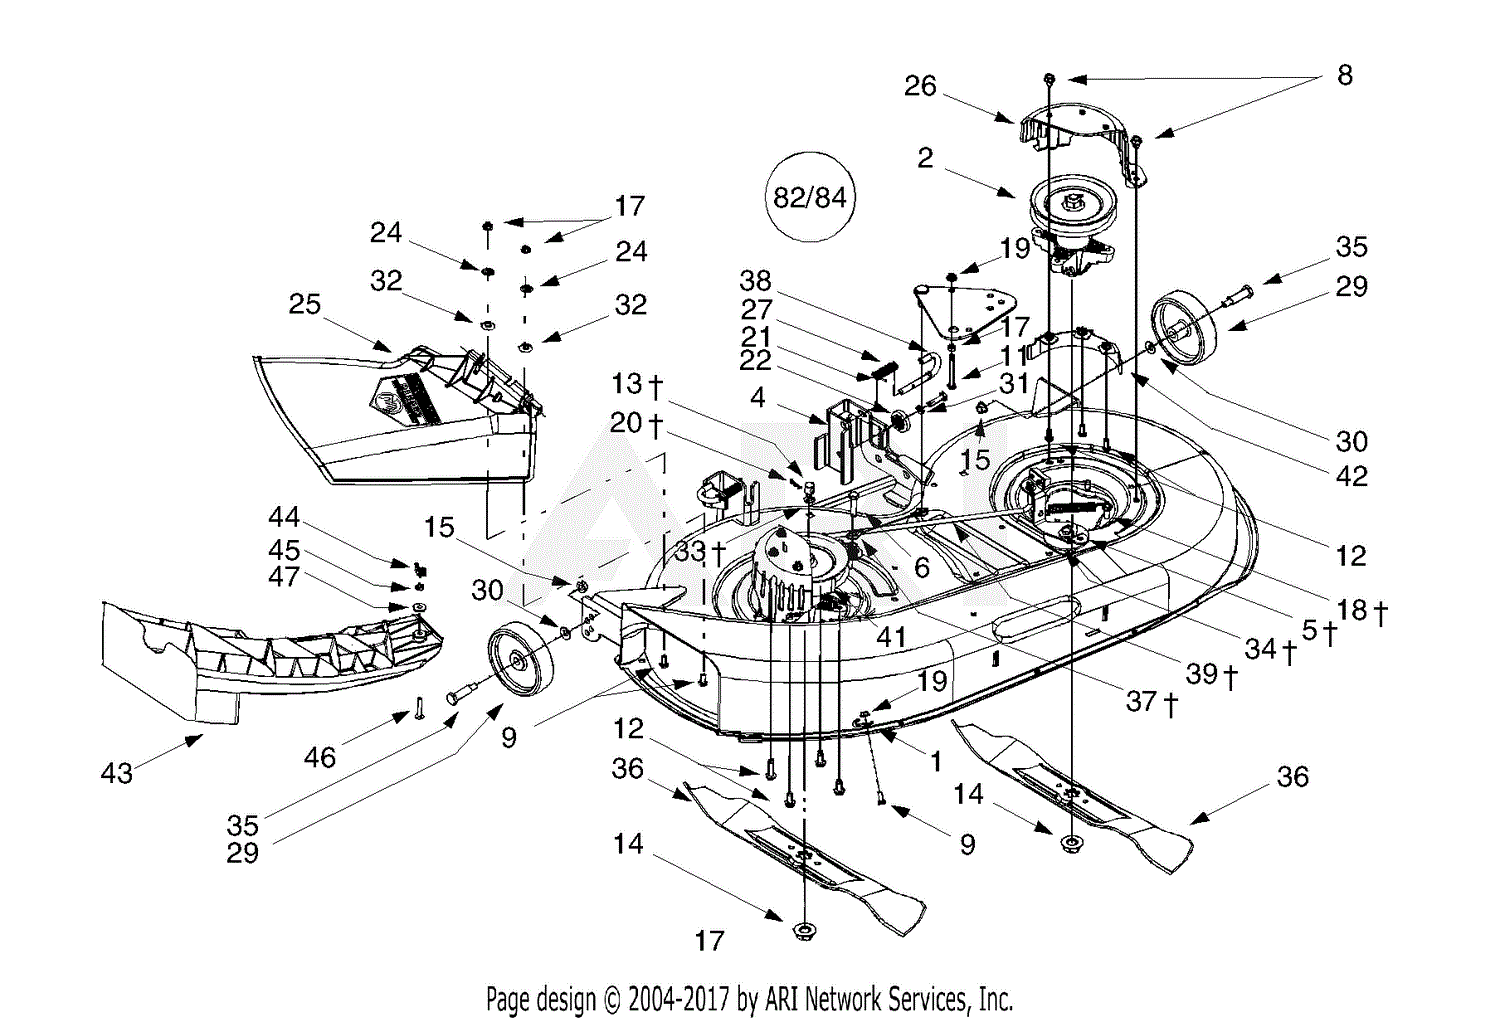 [DIAGRAM] Rail Yard Diagrams - MYDIAGRAM.ONLINE